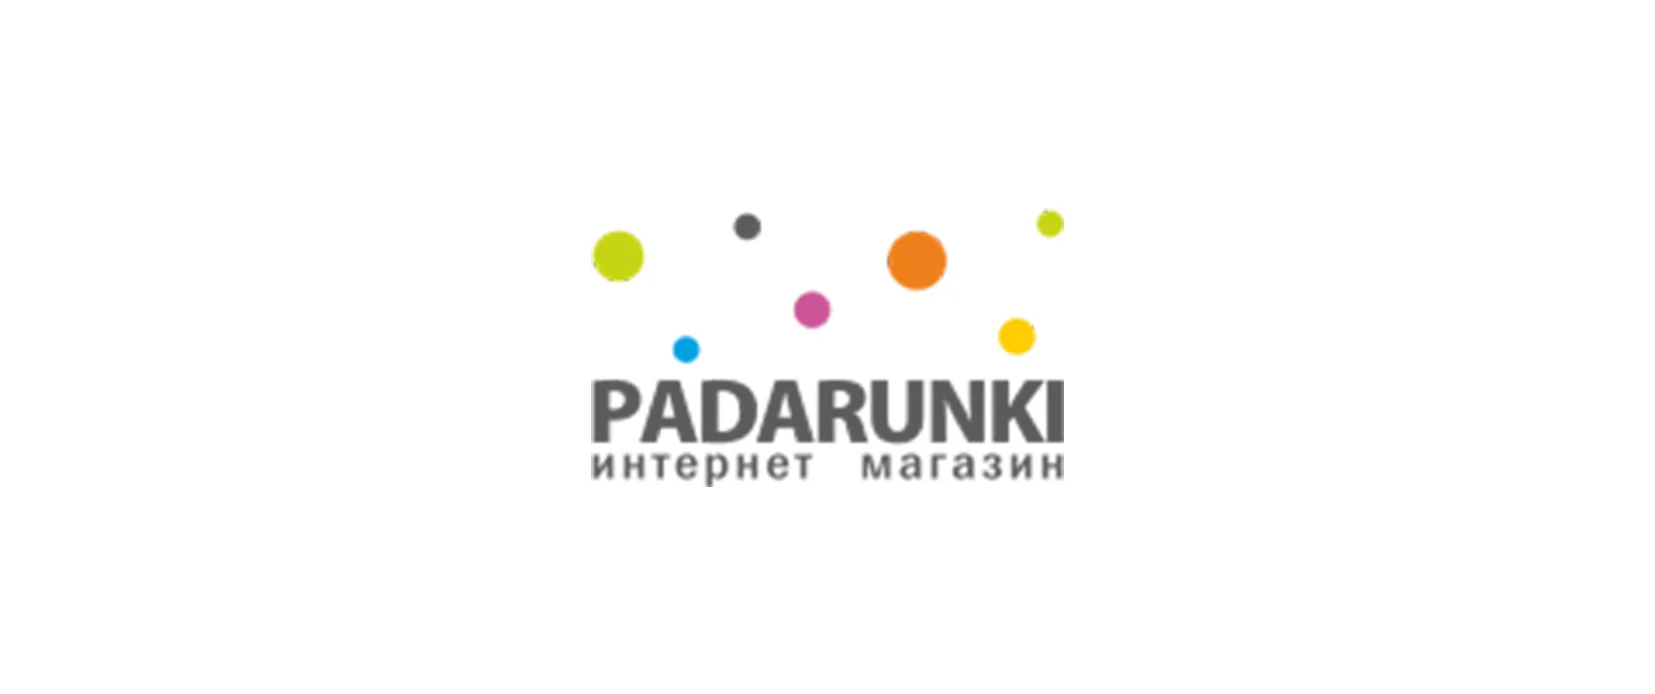 Padarunki.by - интернет-магазин подарков